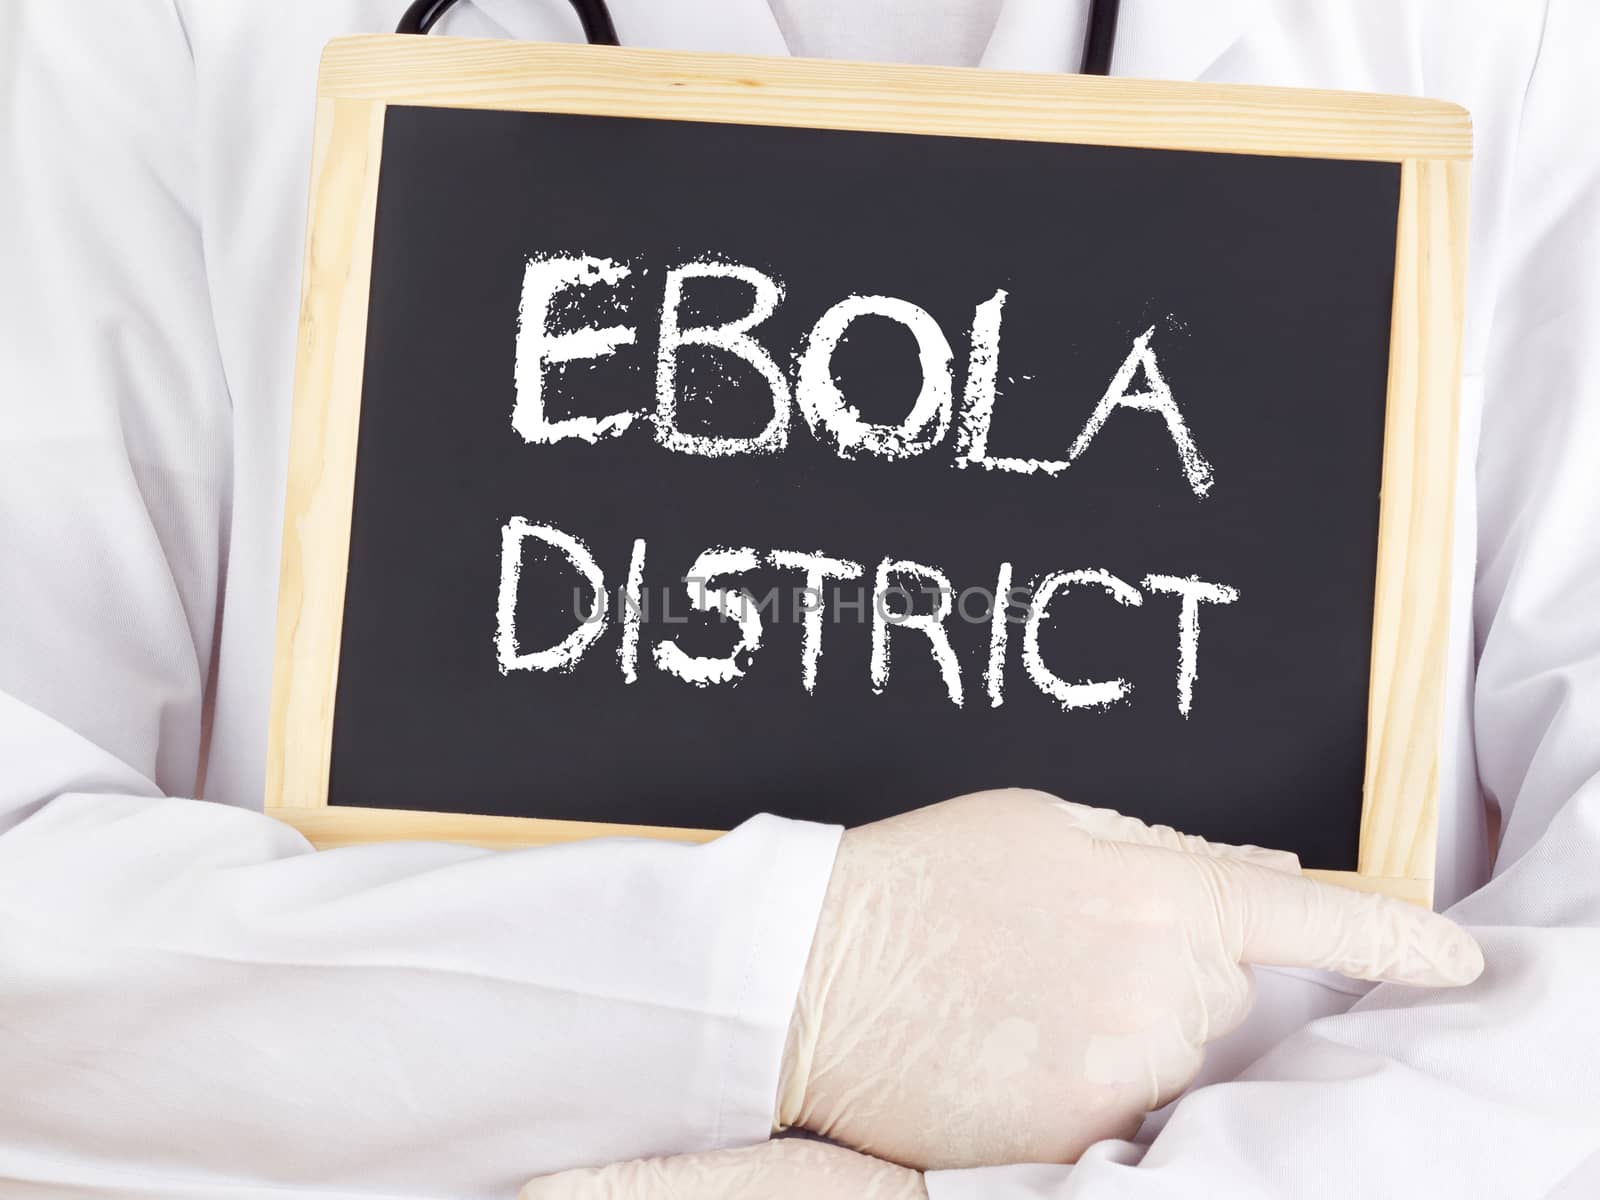 Doctor shows information: Ebola district